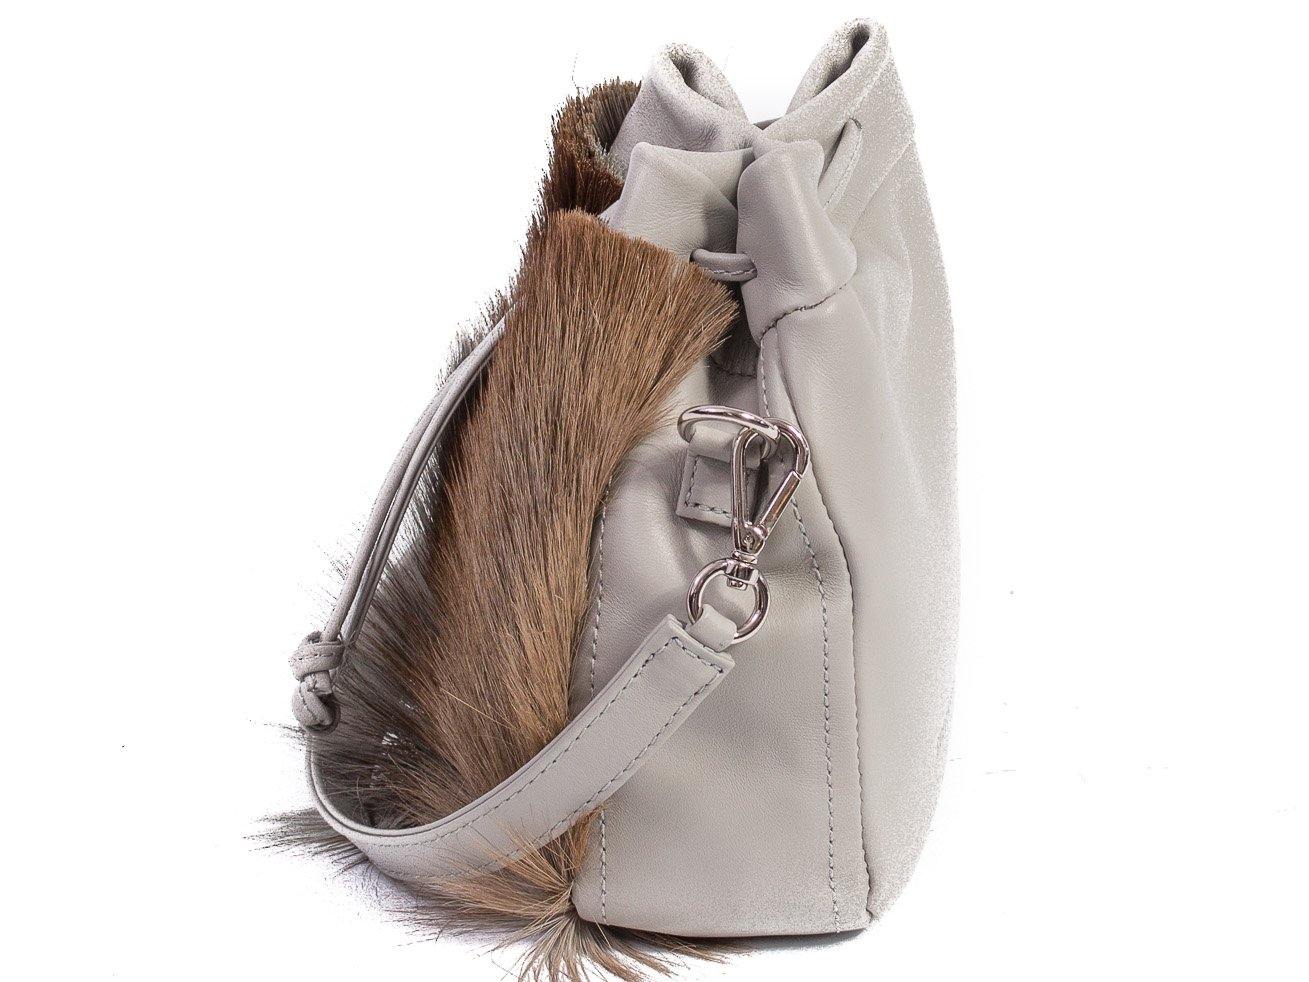 sherene melinda springbok hair-on-hide earth leather pouch bag Fan side